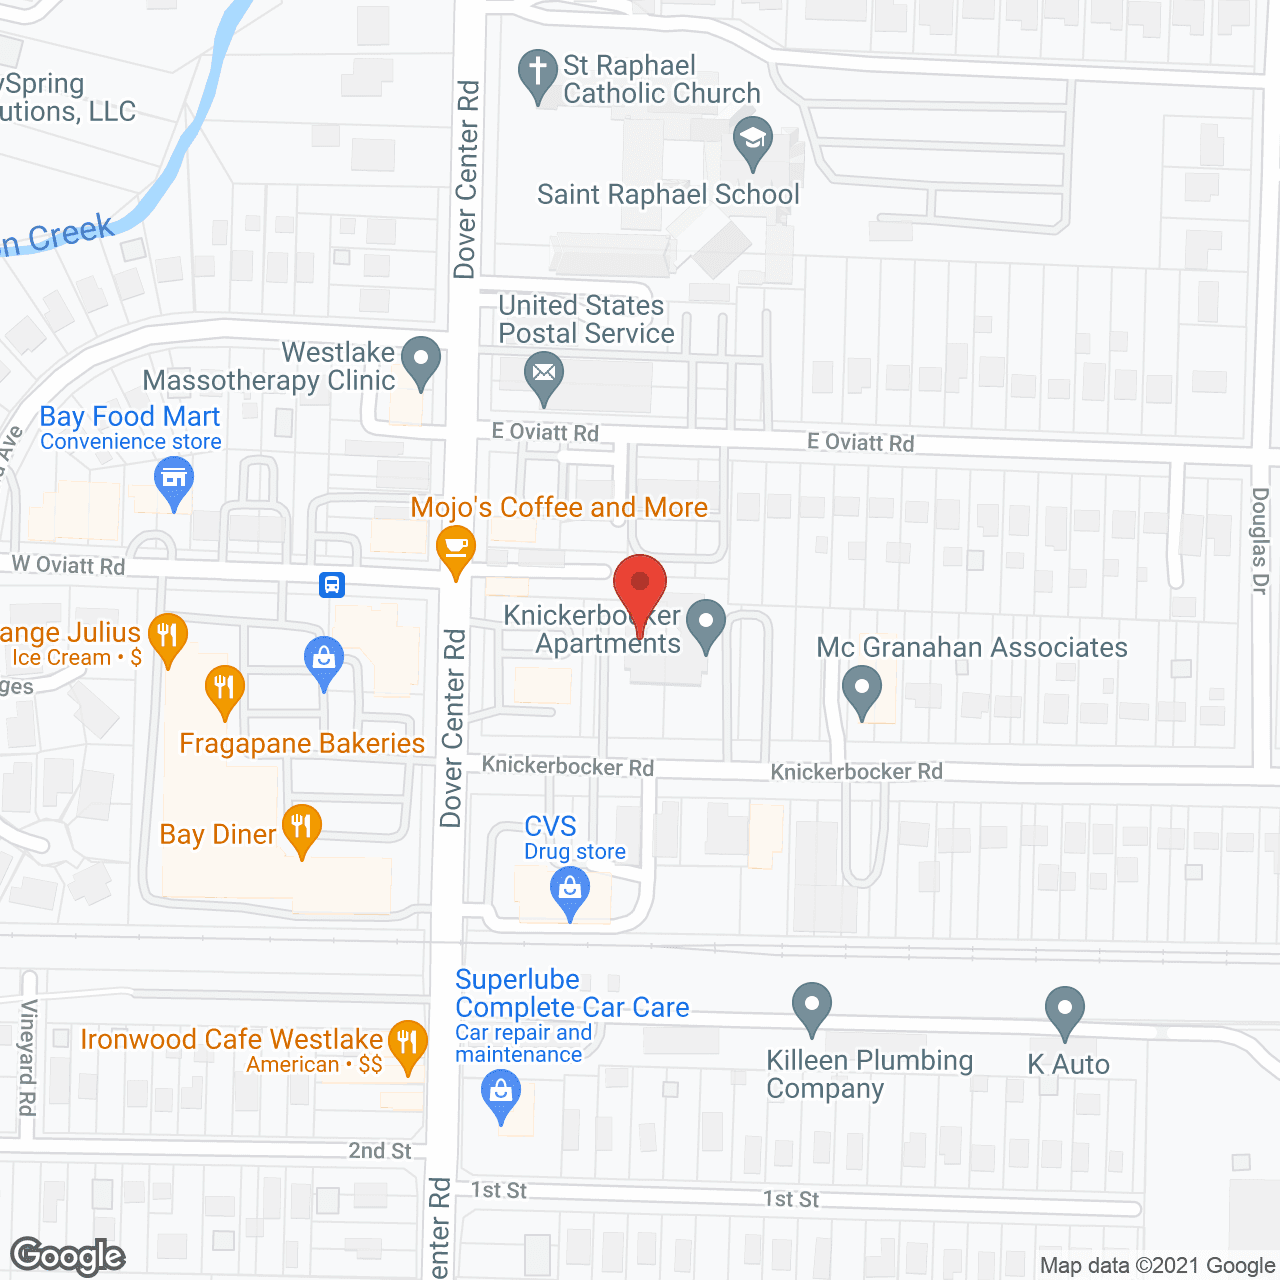 Knickerbocker Apartments in google map